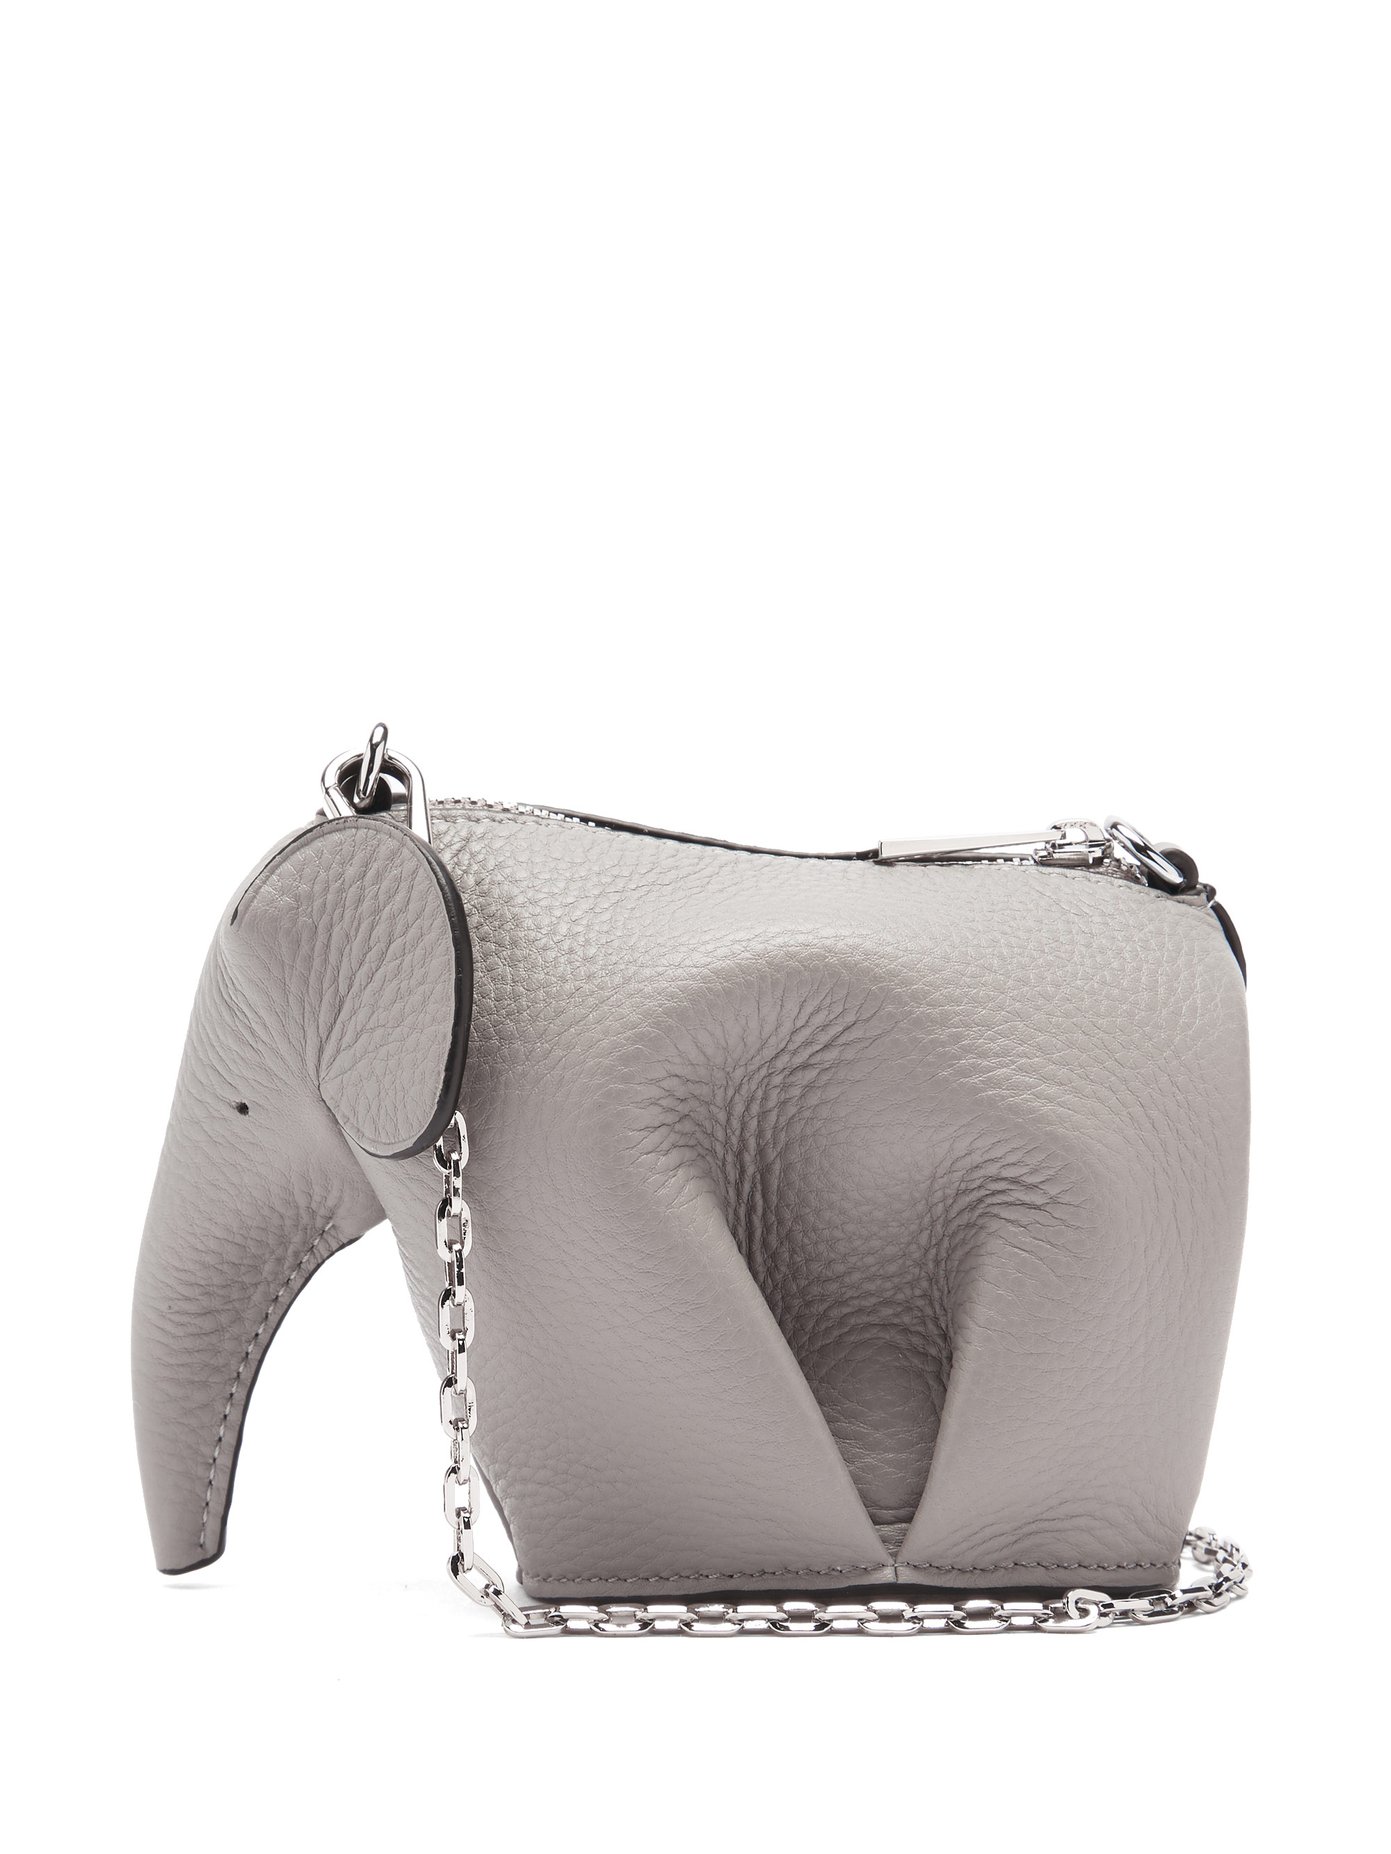 elephant mini bag